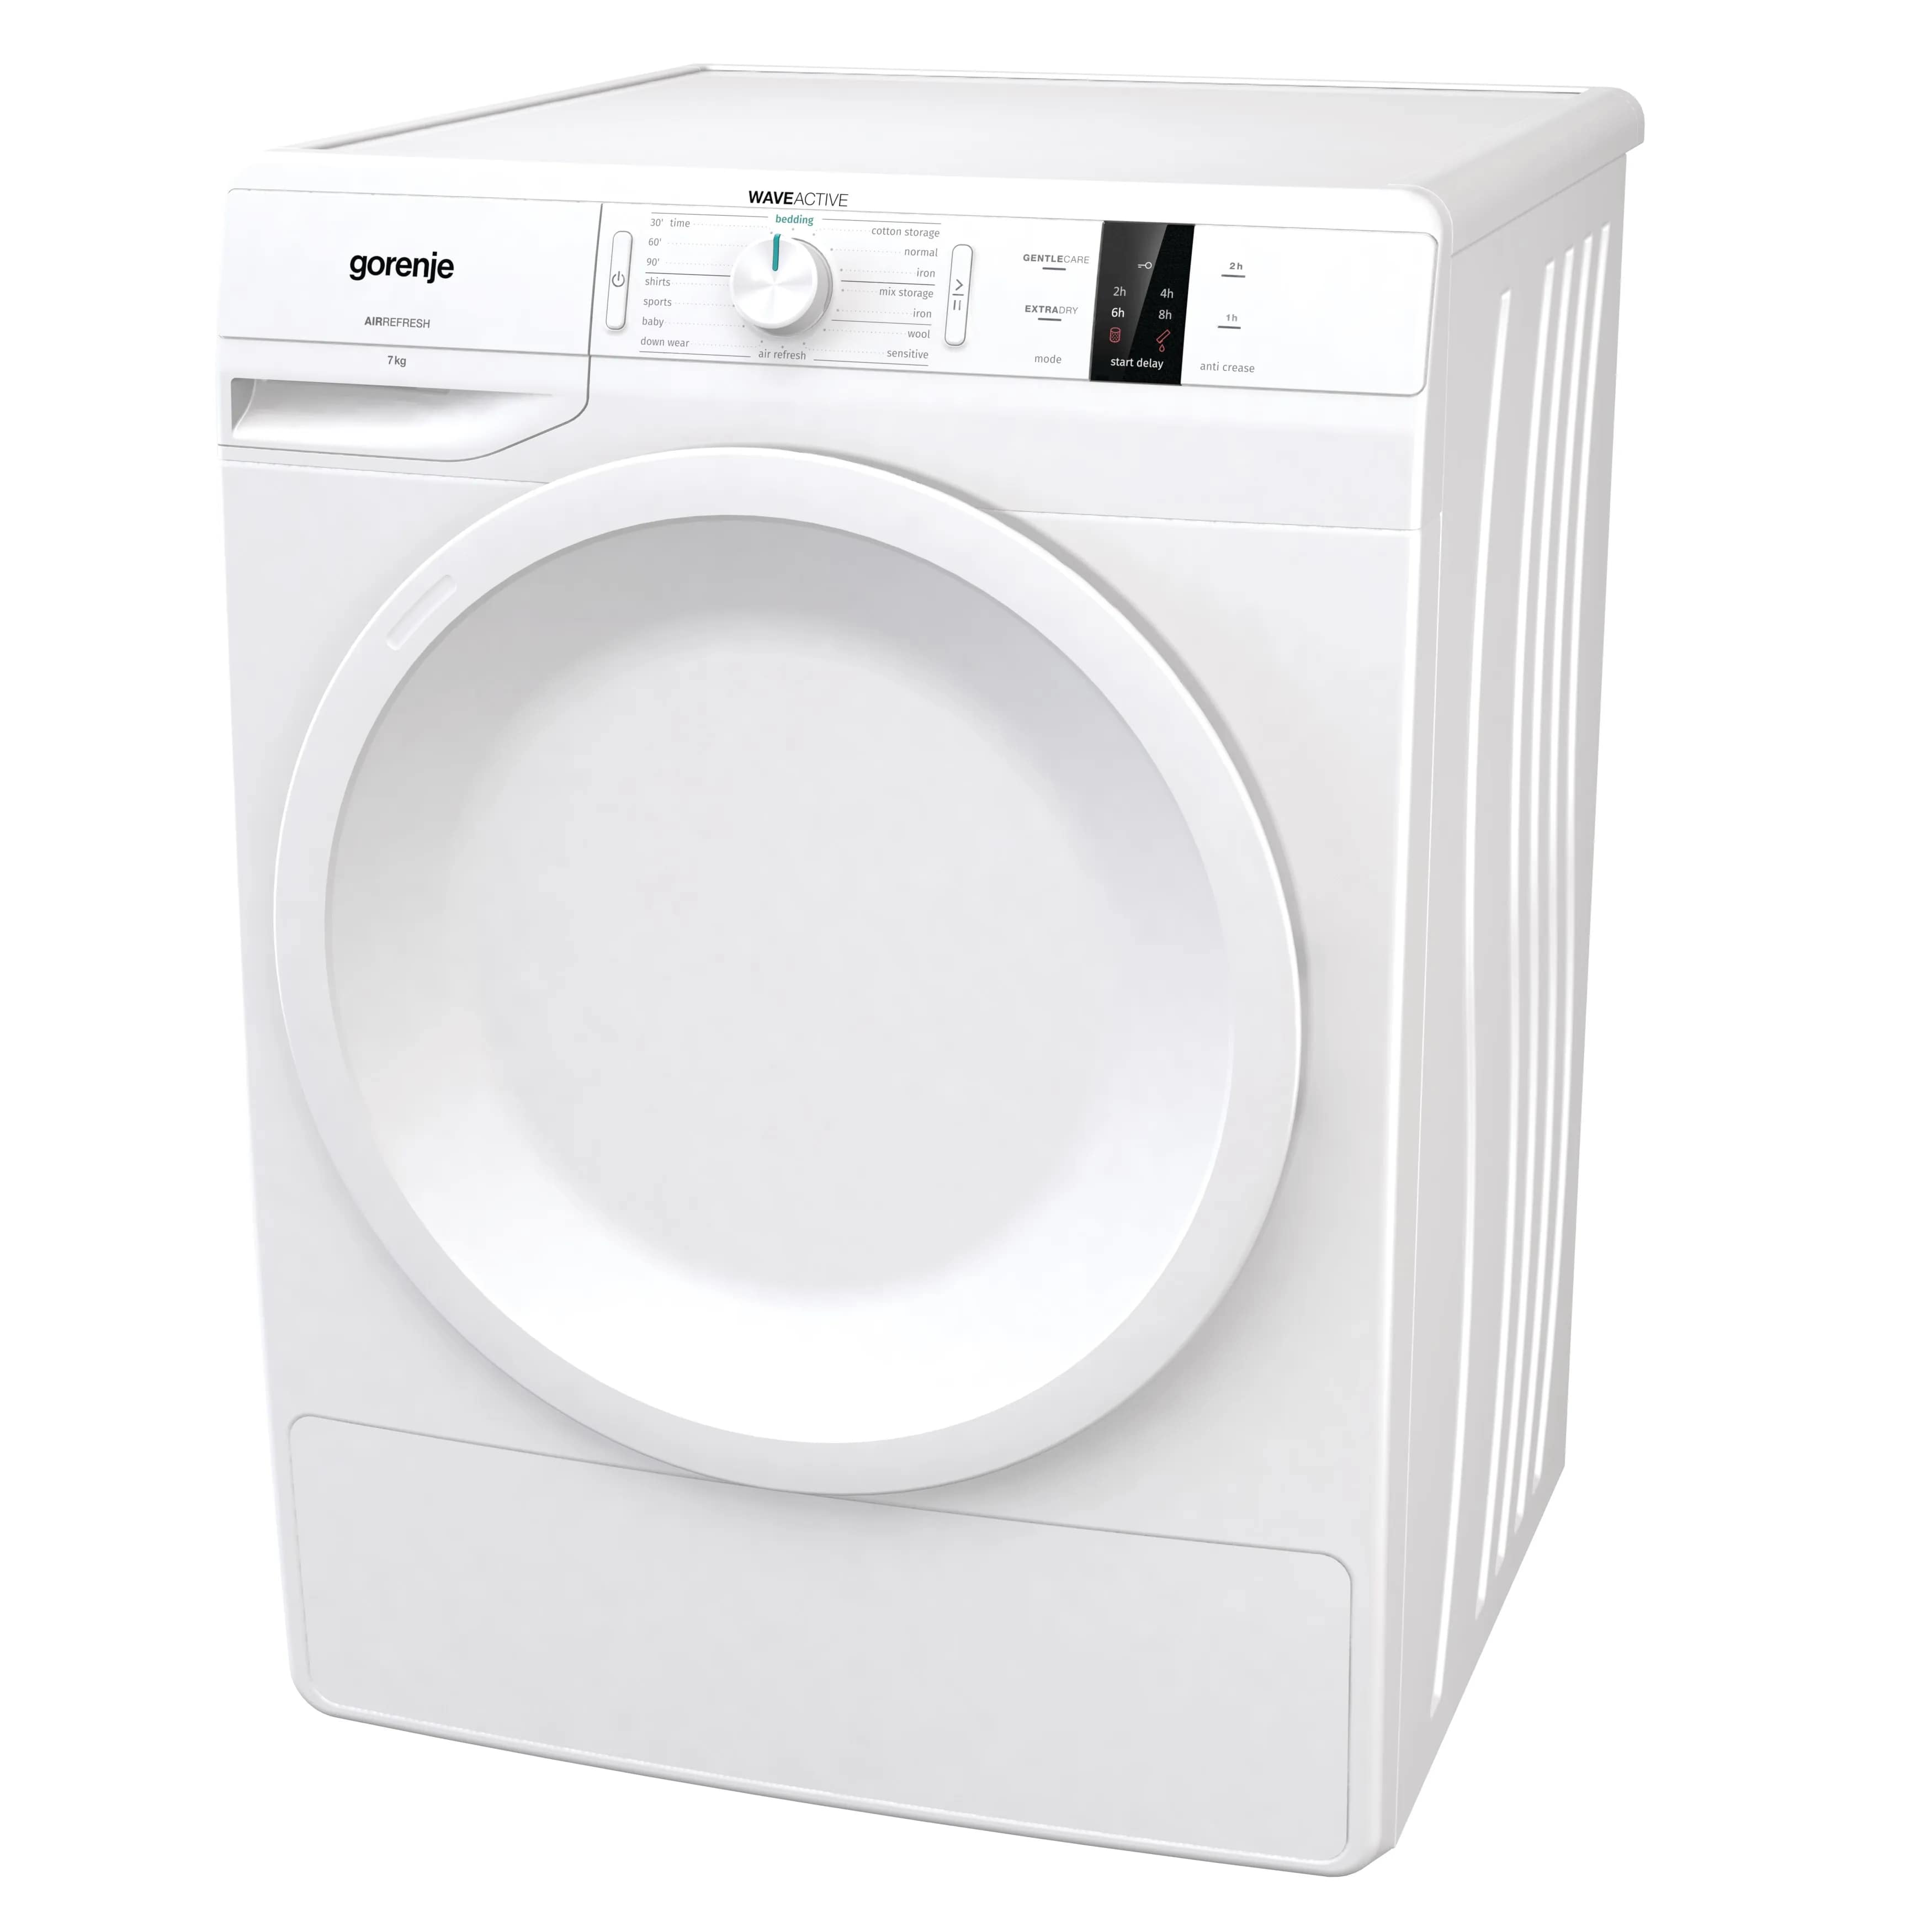 Gorenje - 7 kg European Built Electric Dryer in White - DP7C